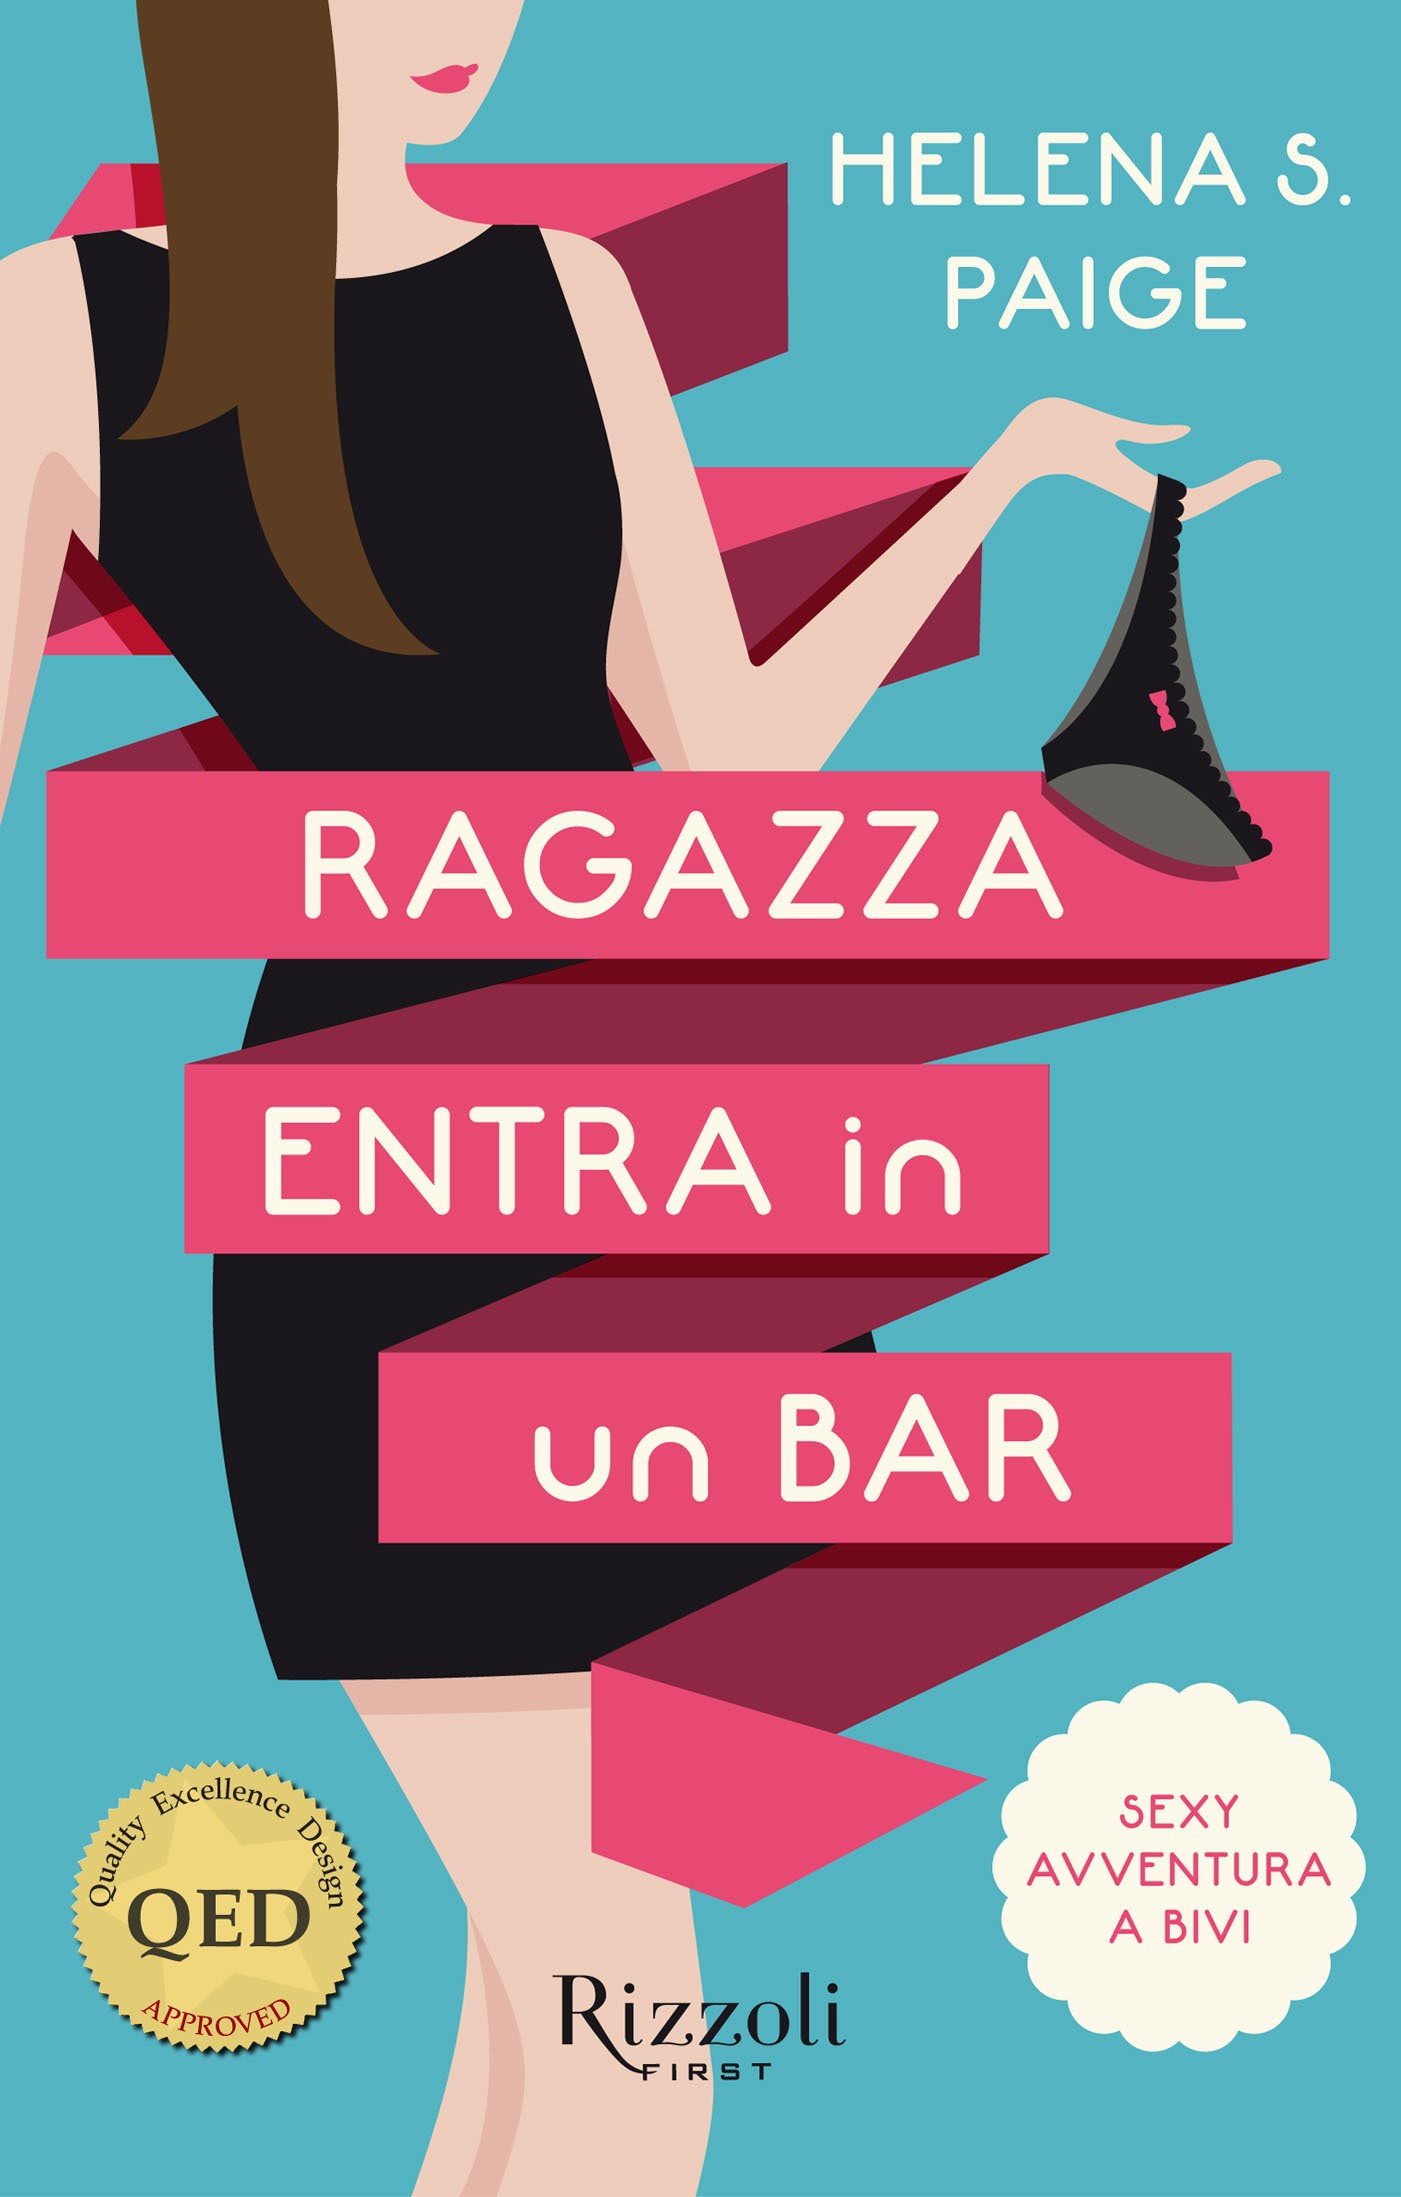 Ragazza entra in un bar - Librerie.coop